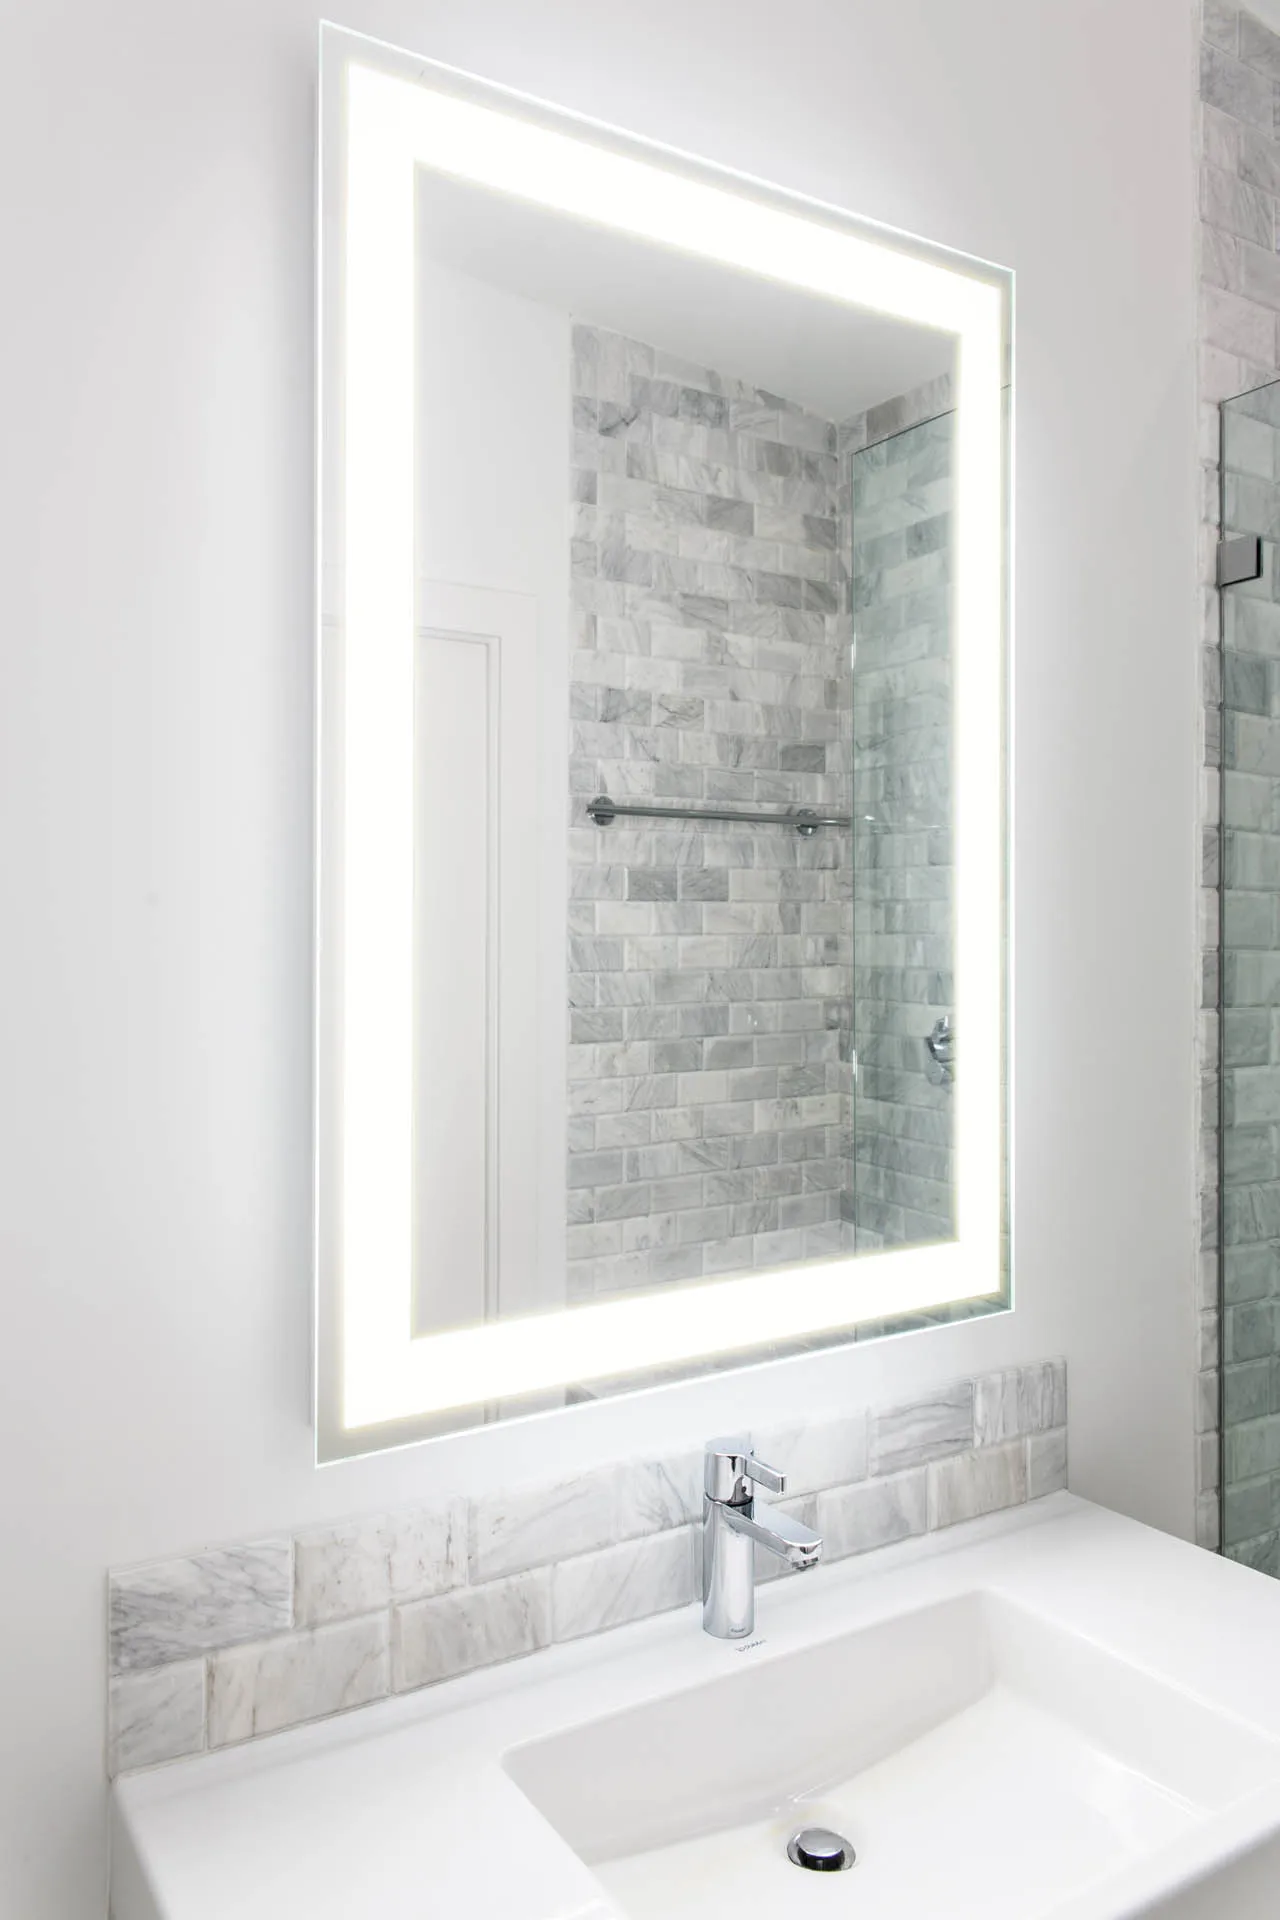 Bath Led Mirror Hotel Rectangular Bathroom Dimmer Wall Beauty Mirror Led